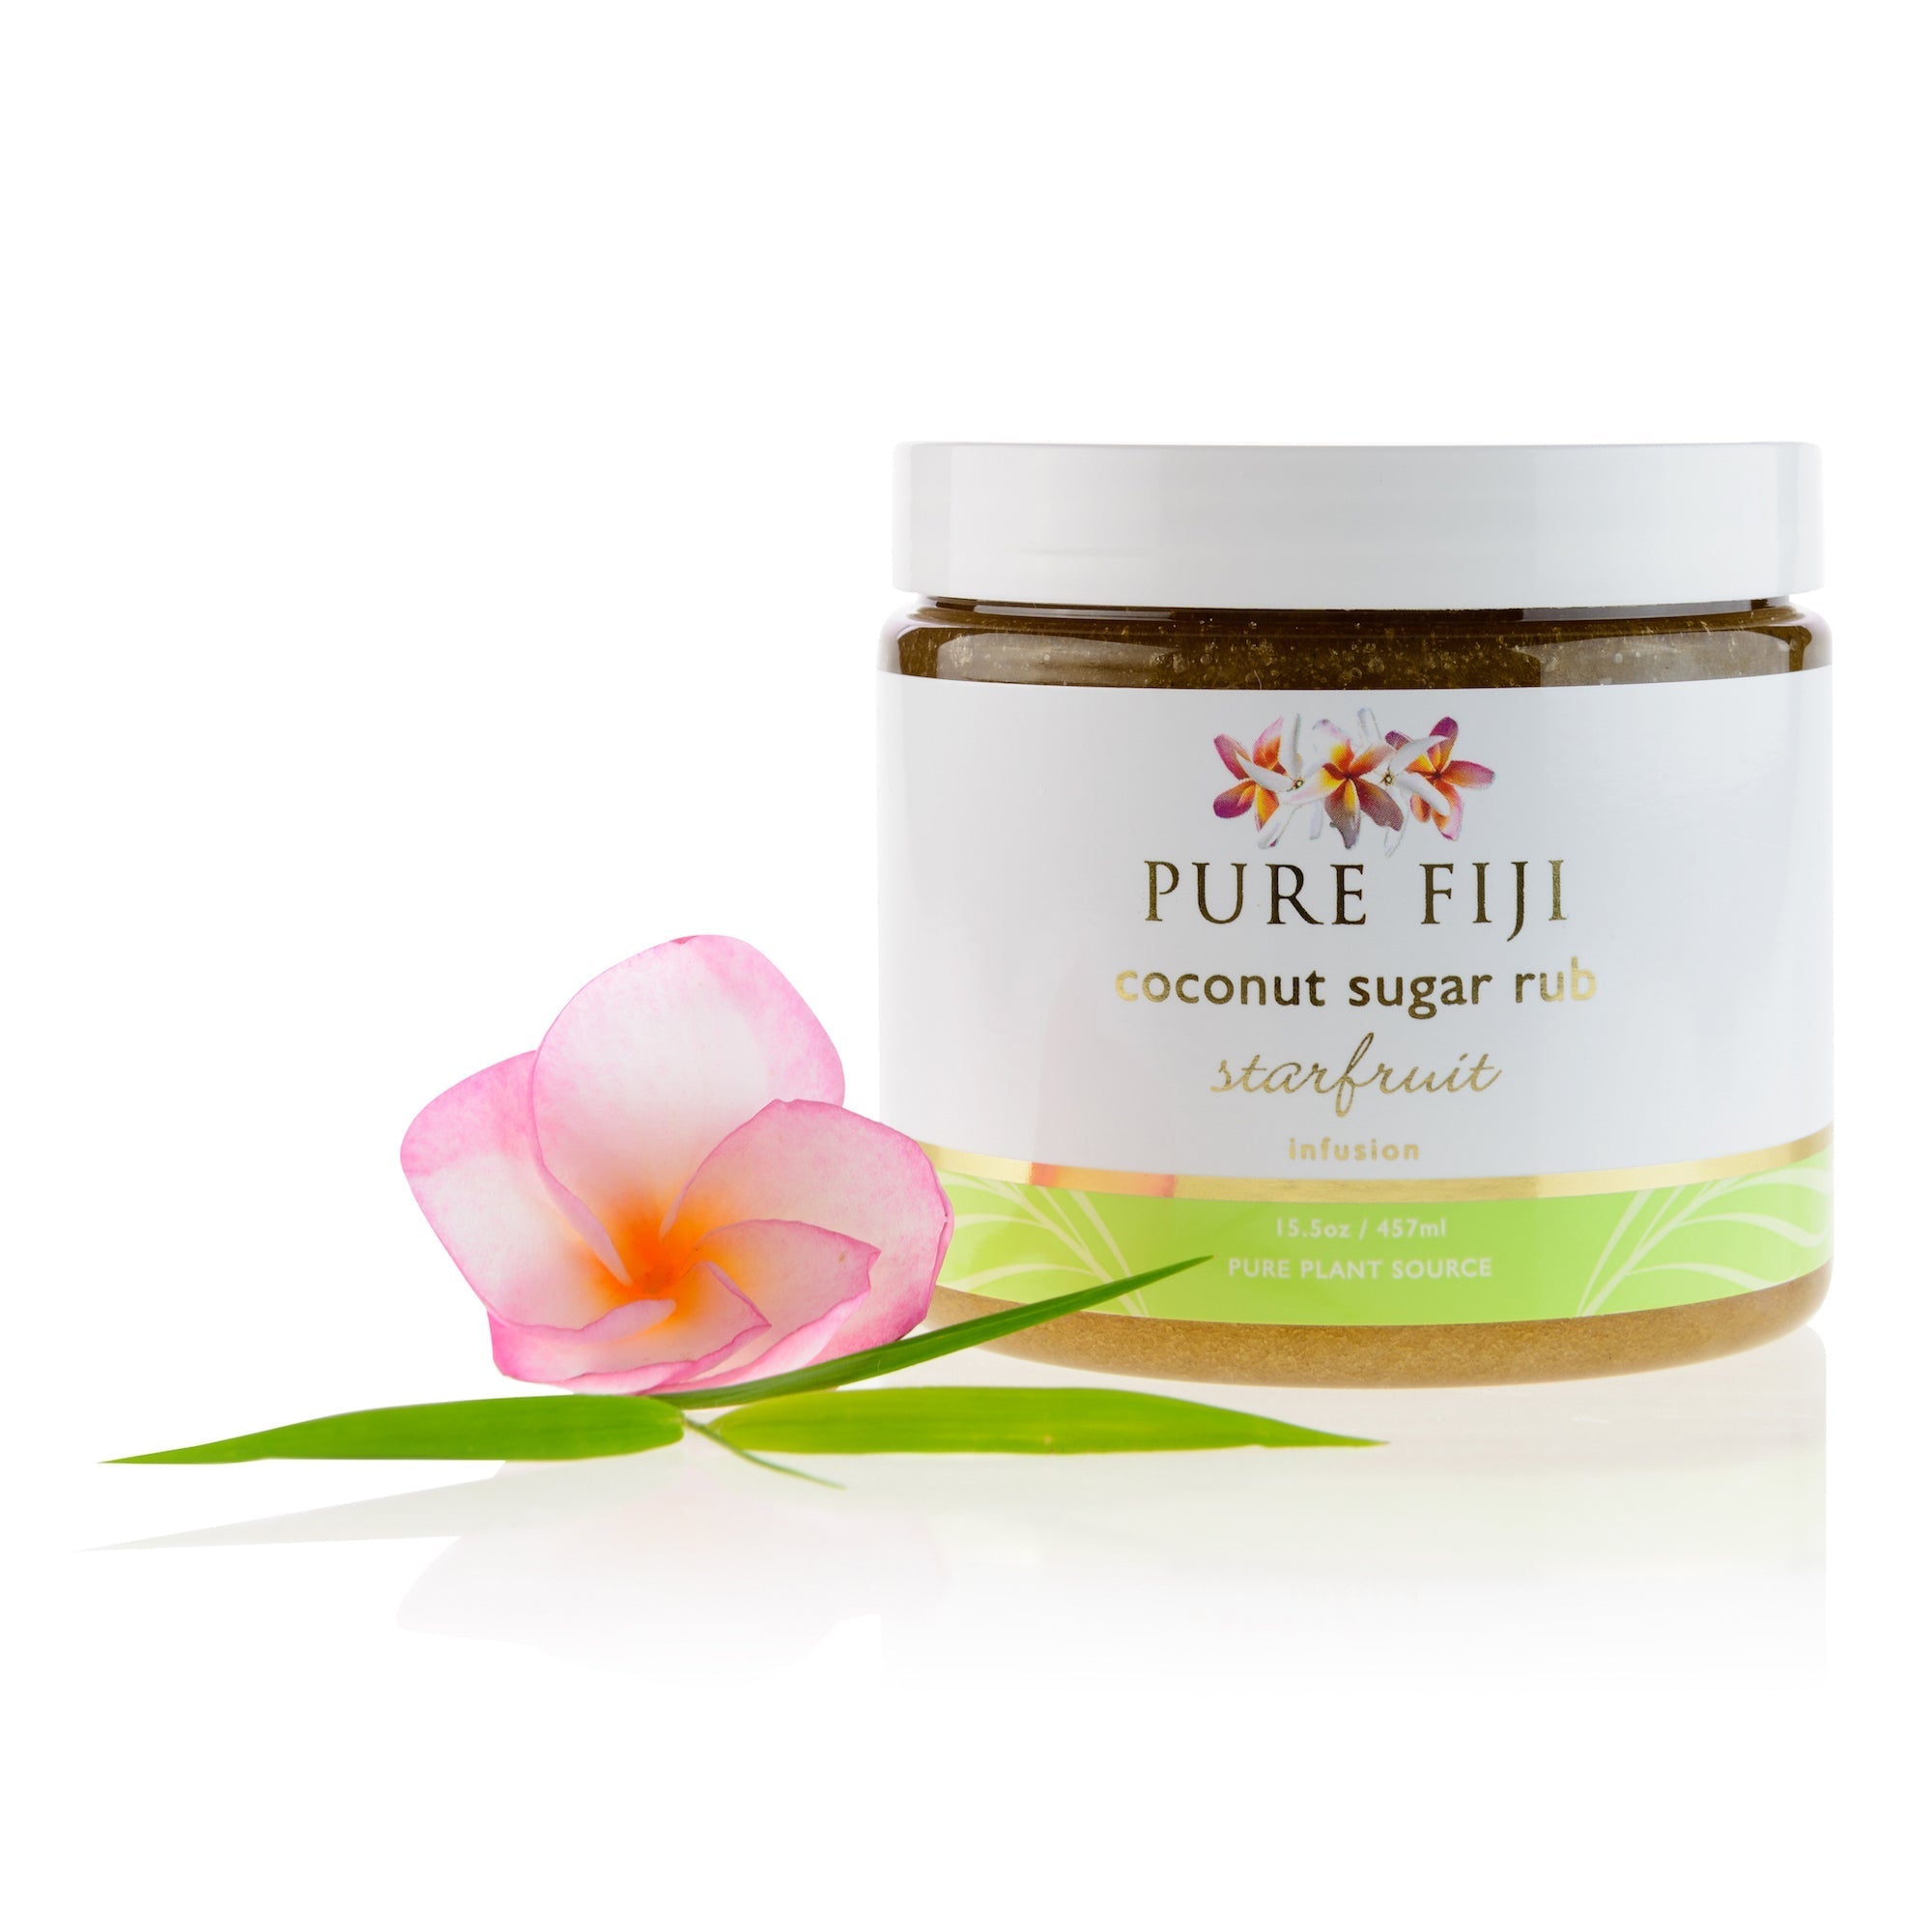 Pure Fiji Coconut Sugar Rub / Starfruit / Swatch